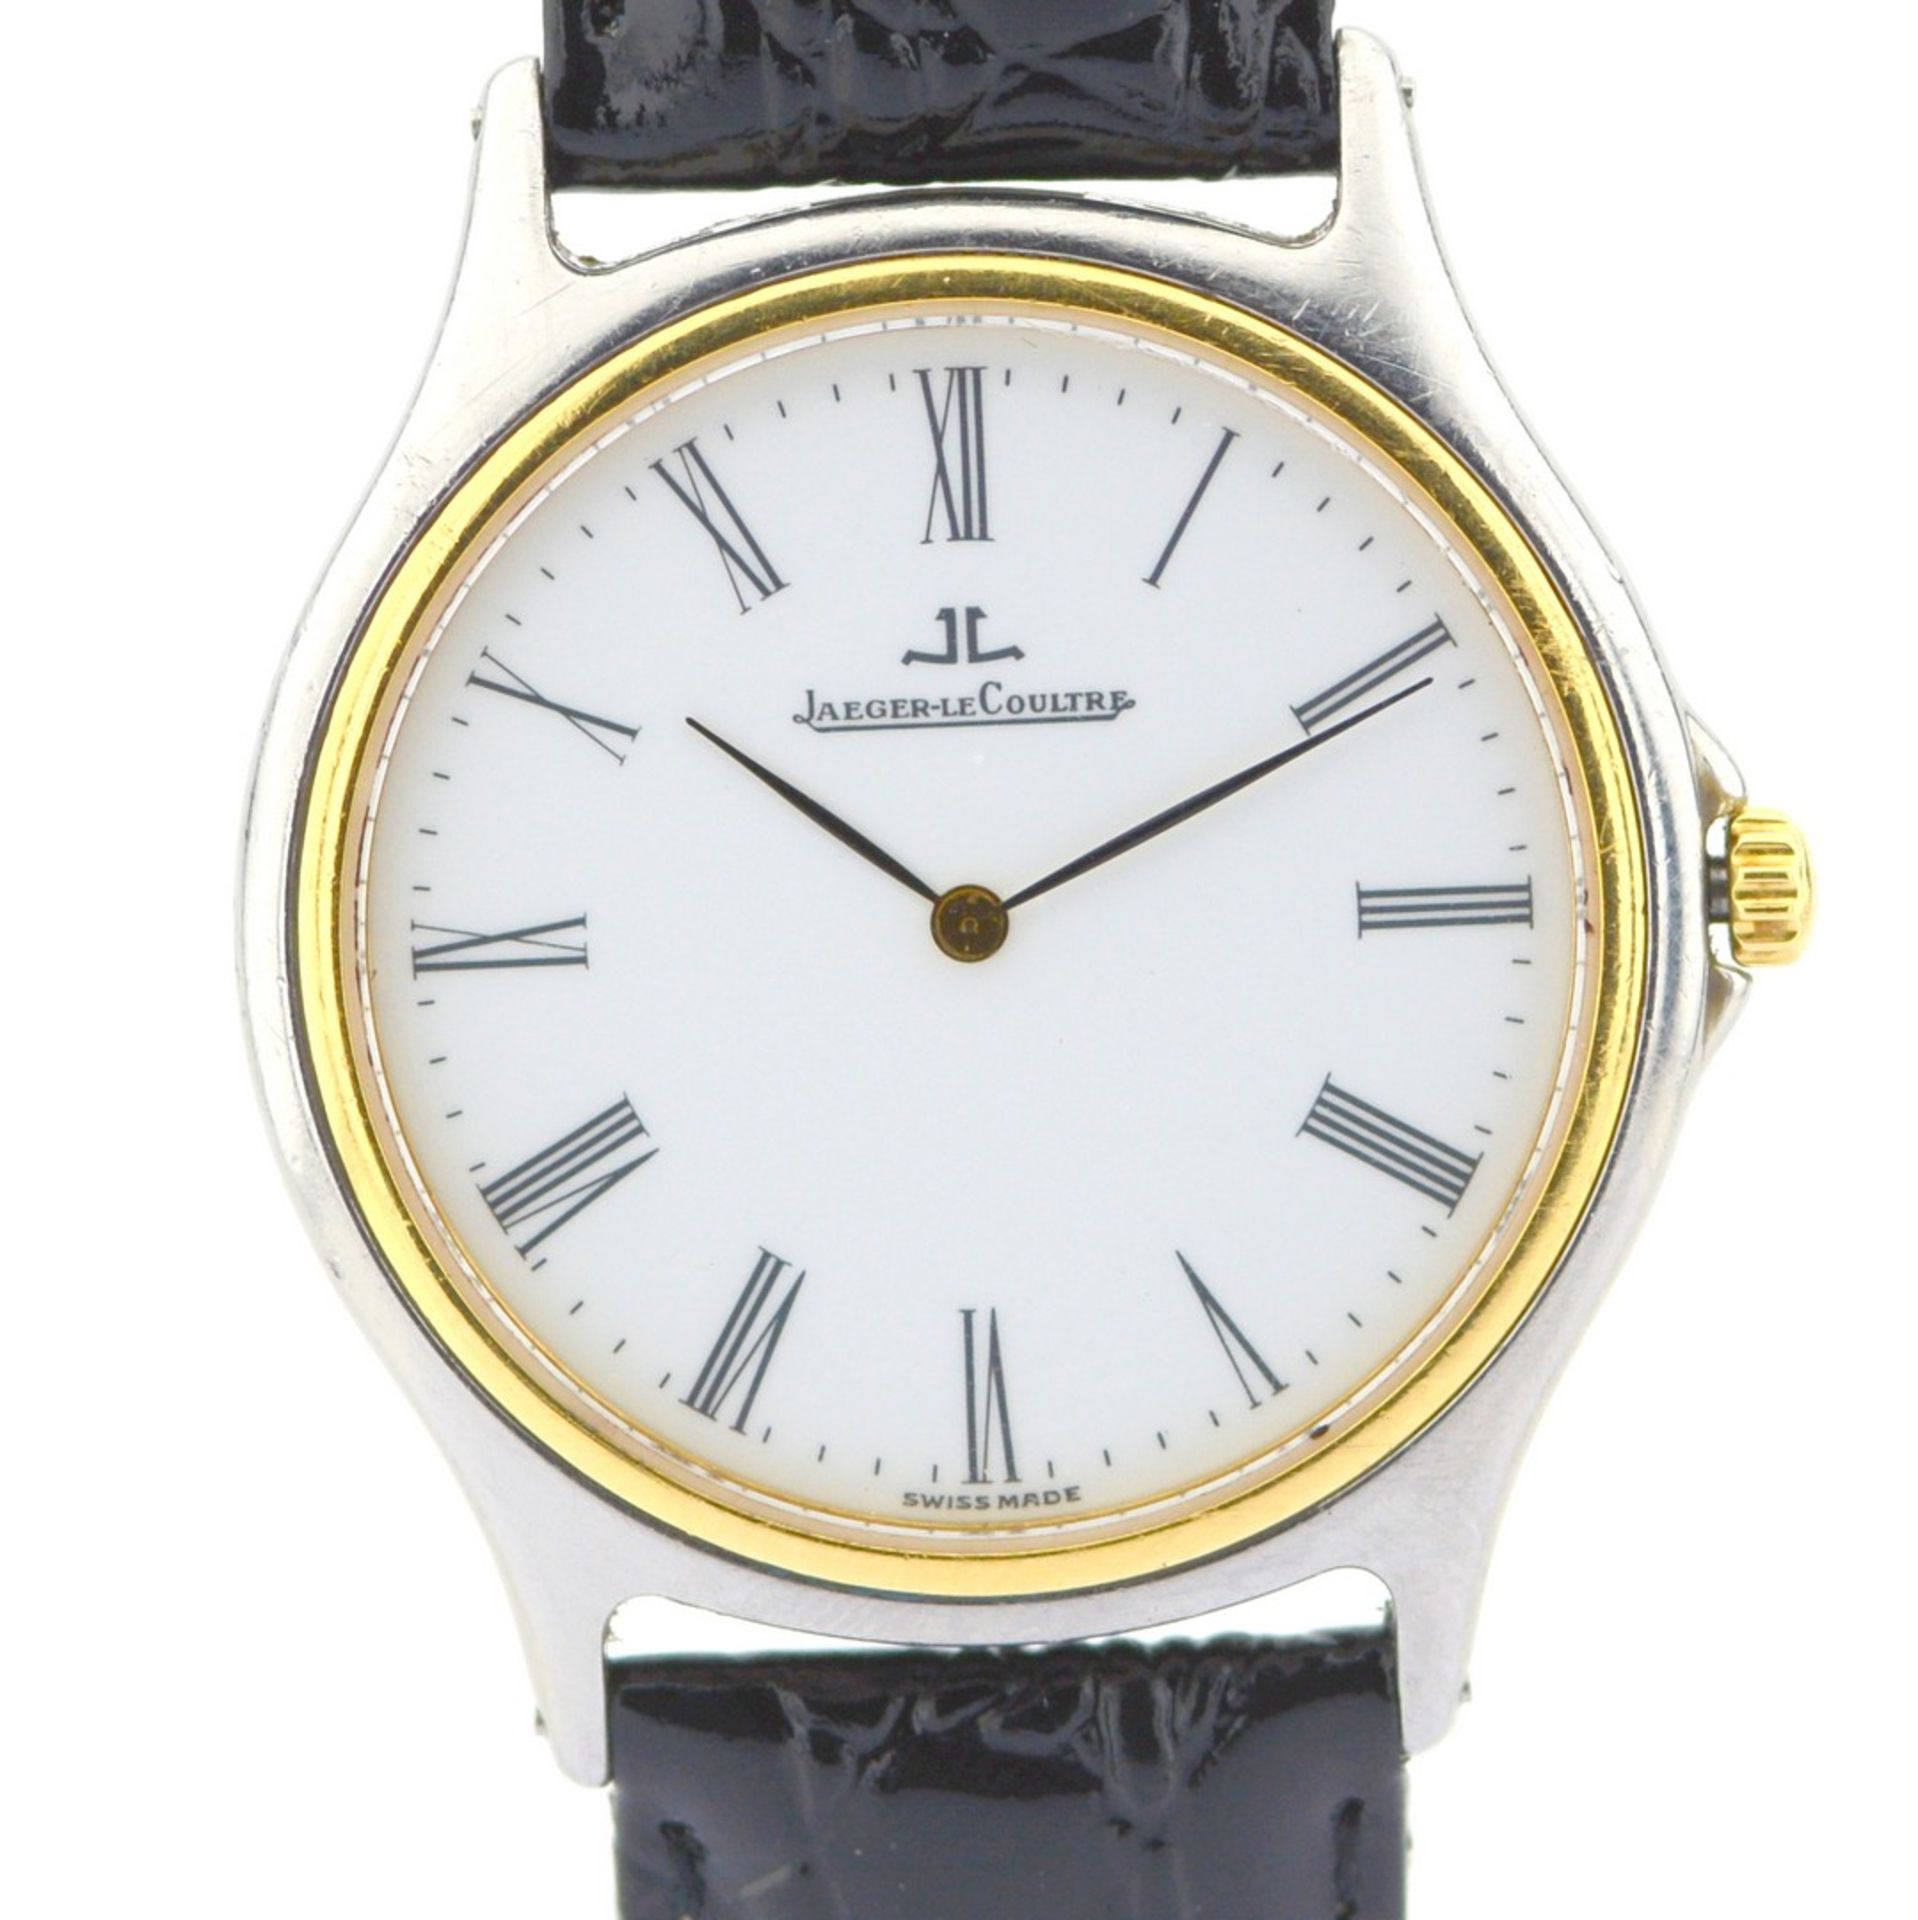 Jaeger / Heraion - Gentlmen's Gold/Steel Wrist Watch - Image 10 of 10